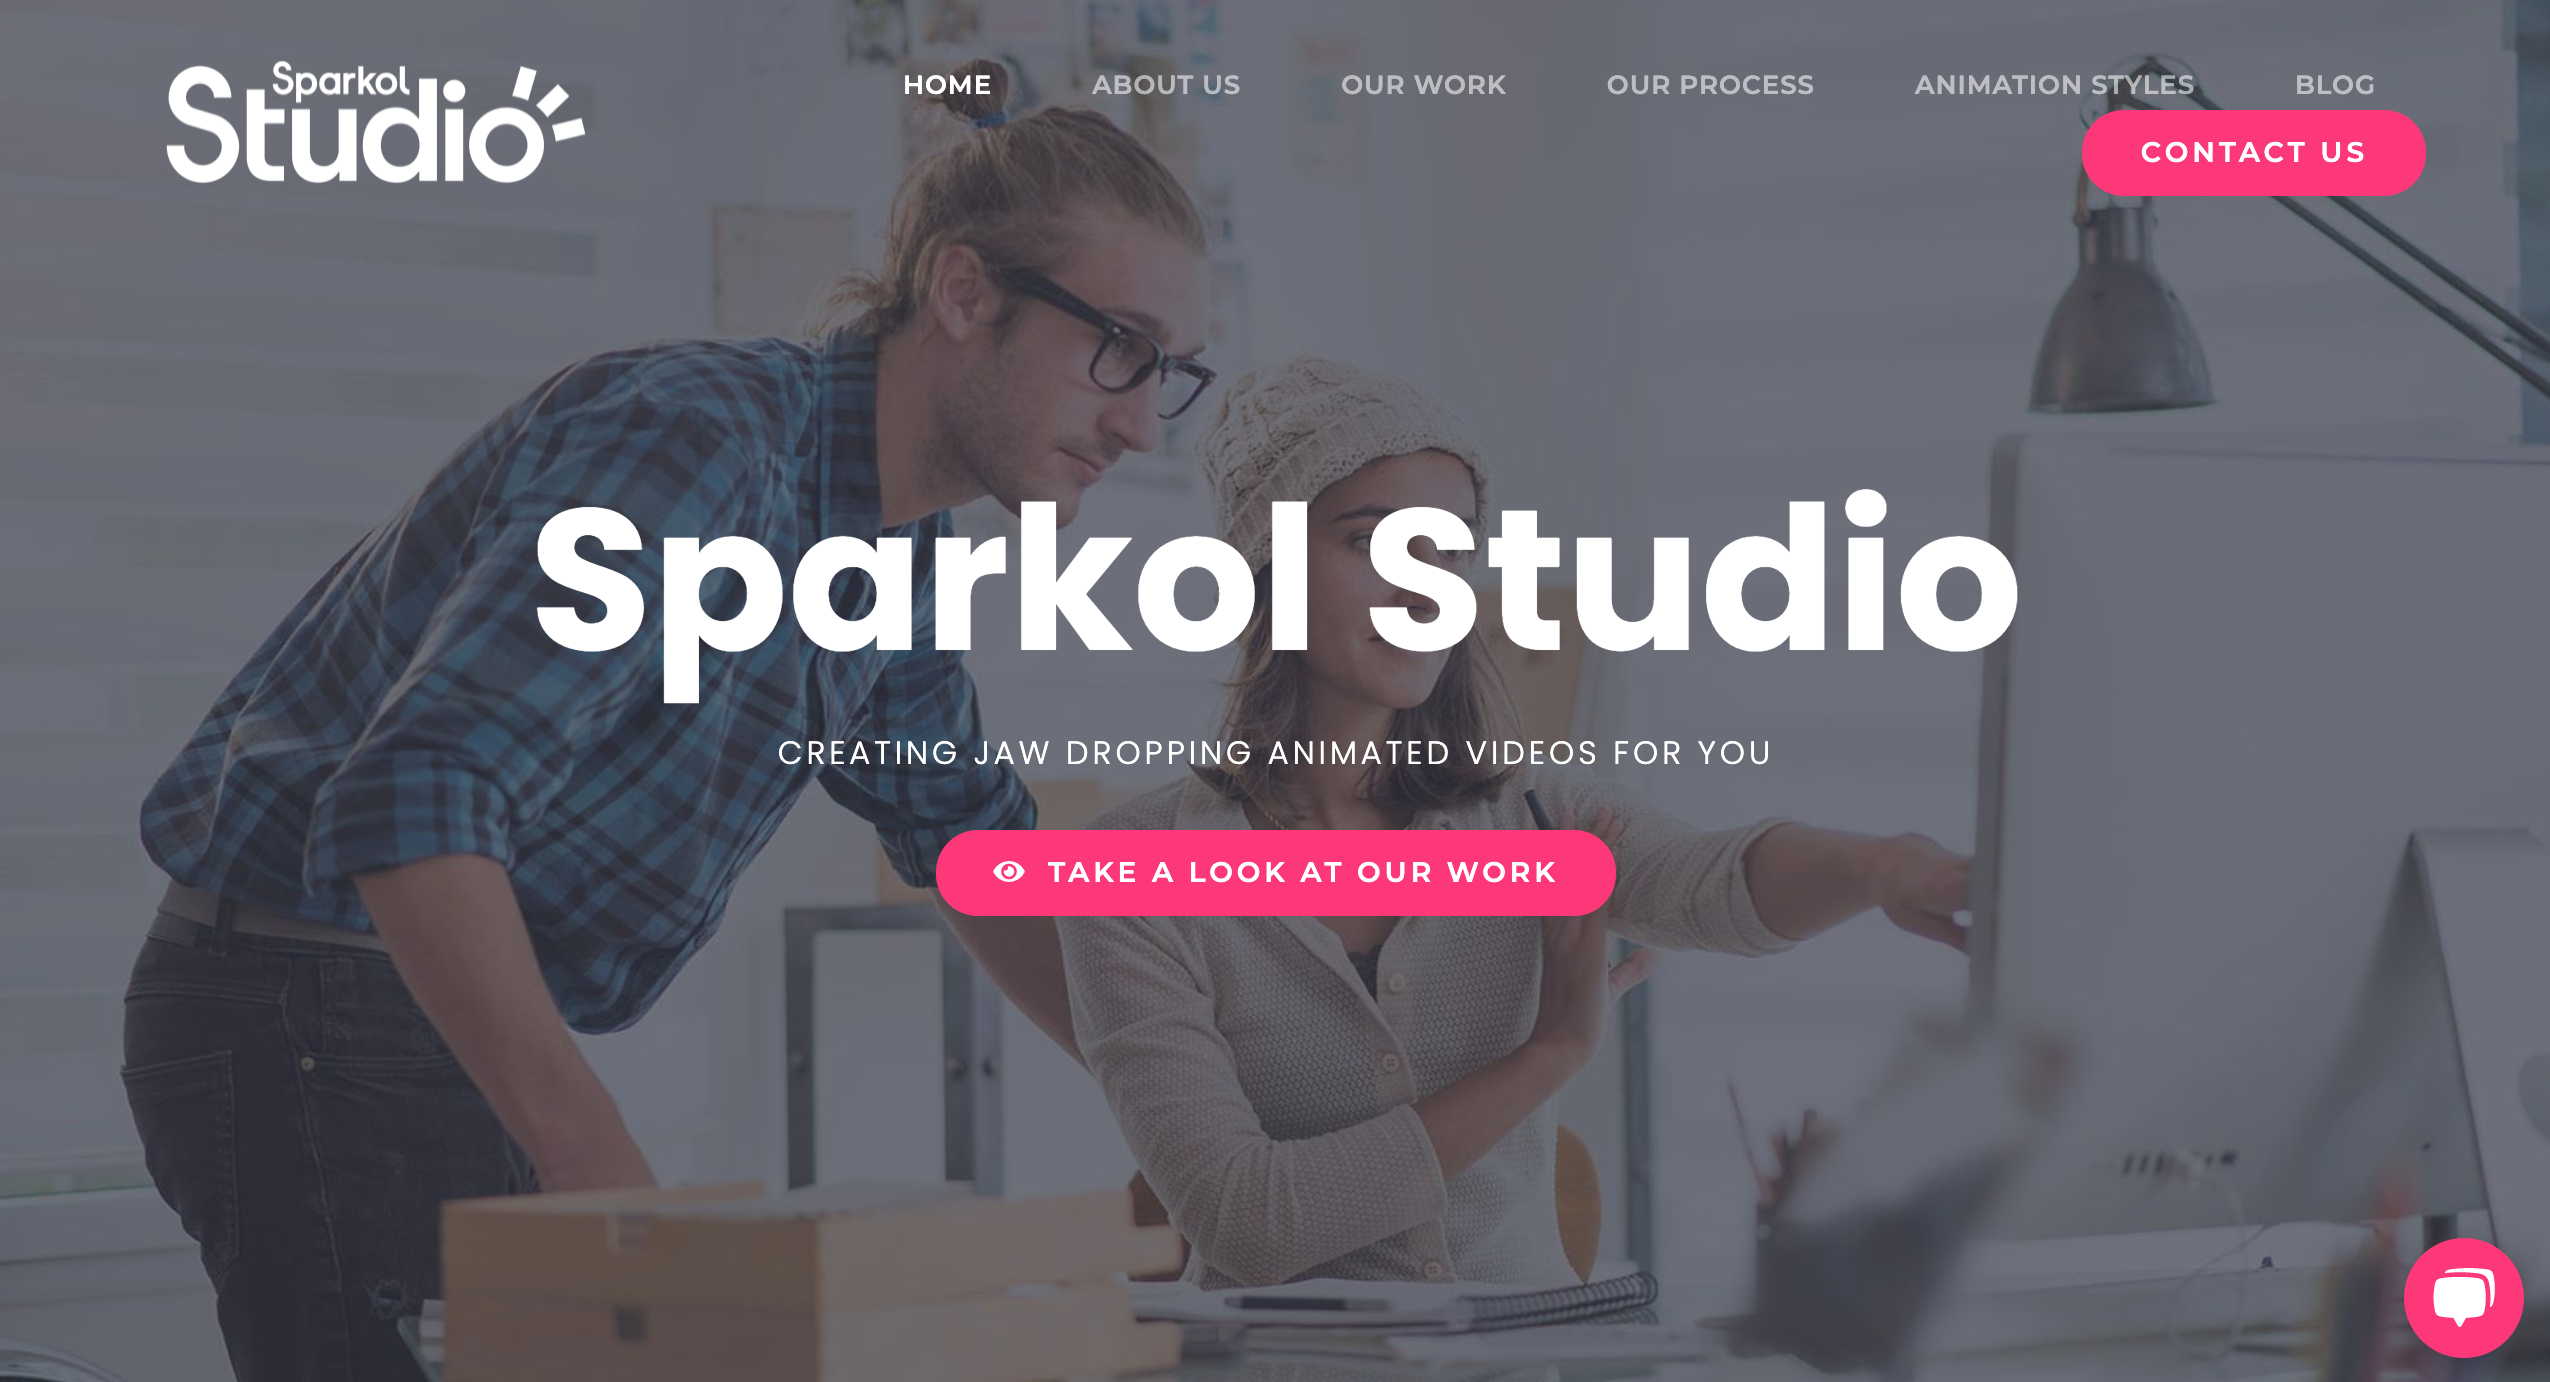 Sparkol Studio website homepage